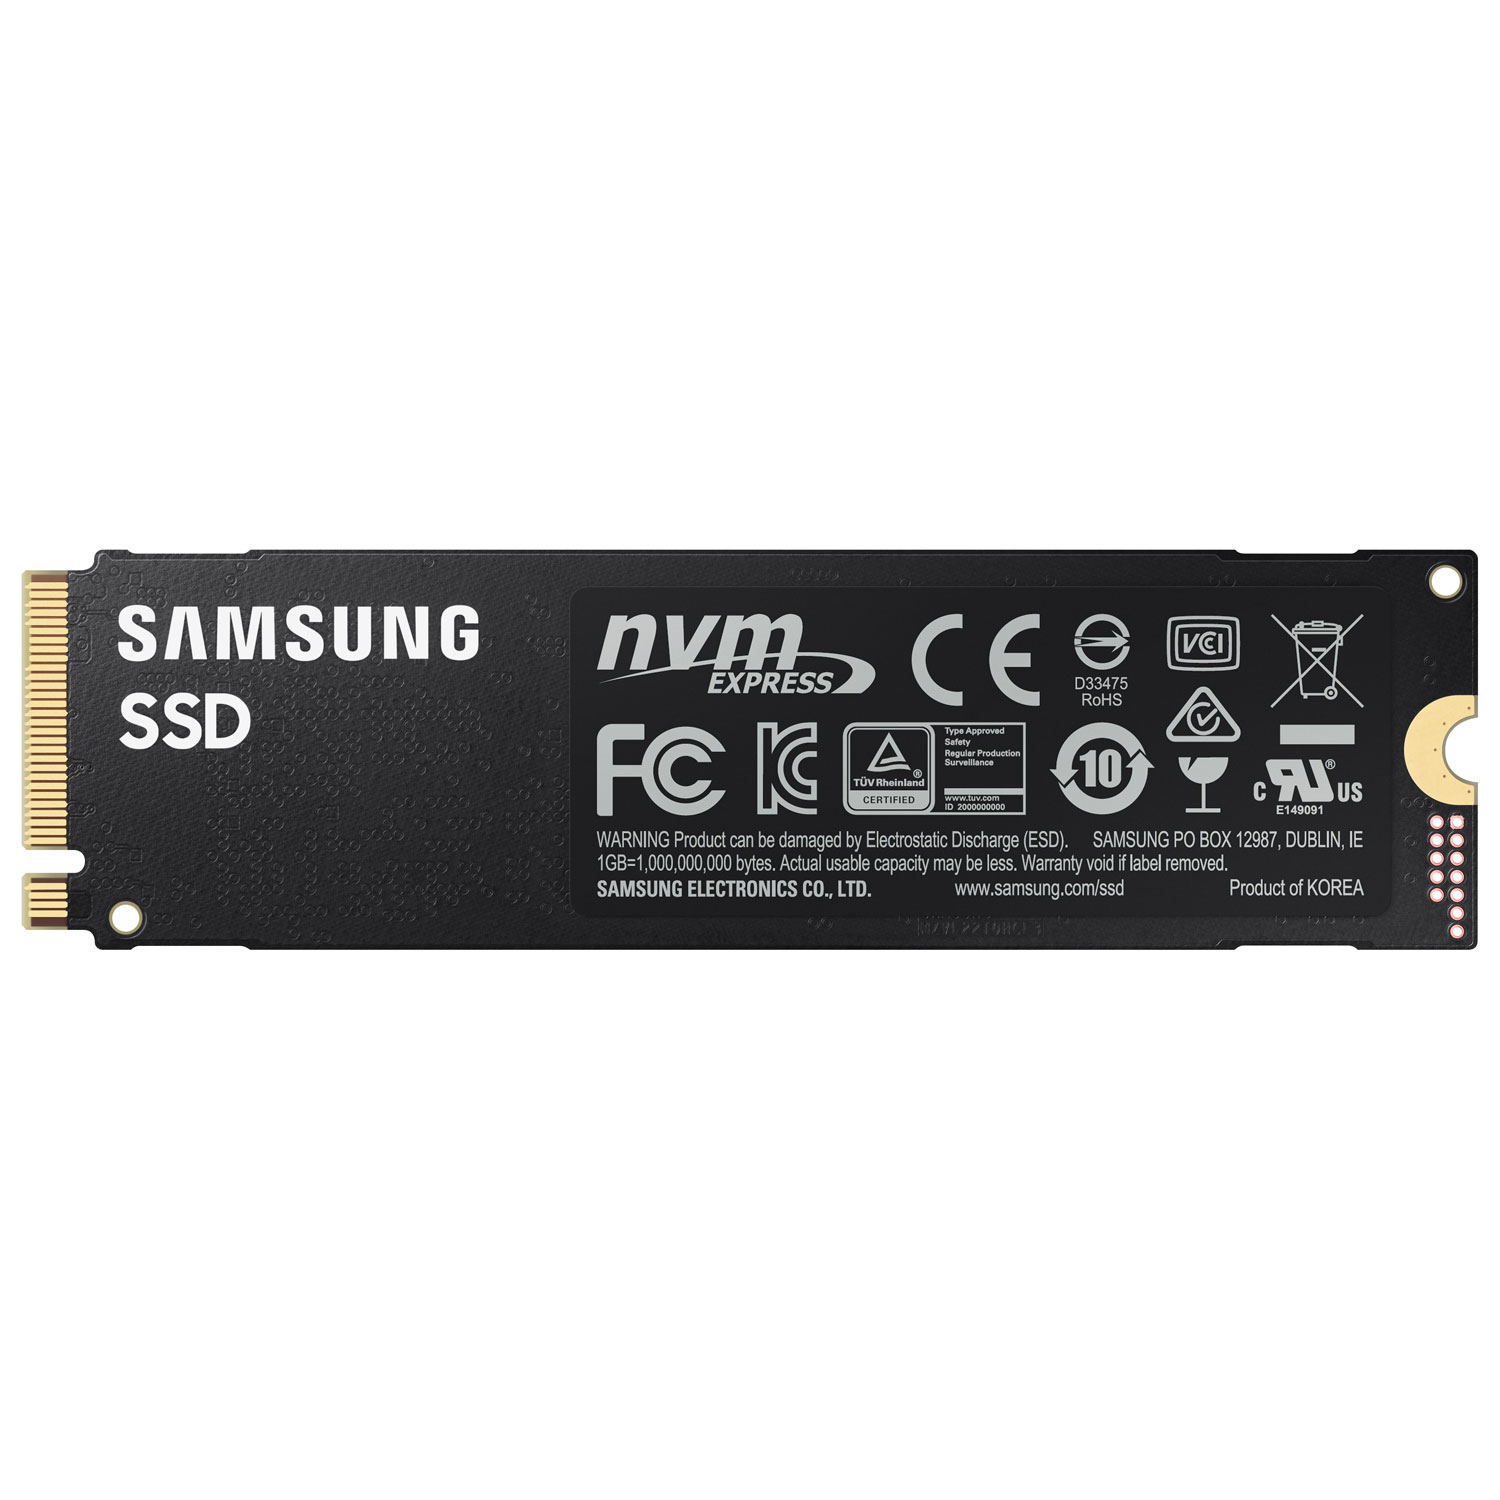 Samsung 980 Pro 500GB NVMe PCI-e Internal Solid State Drive (MZ